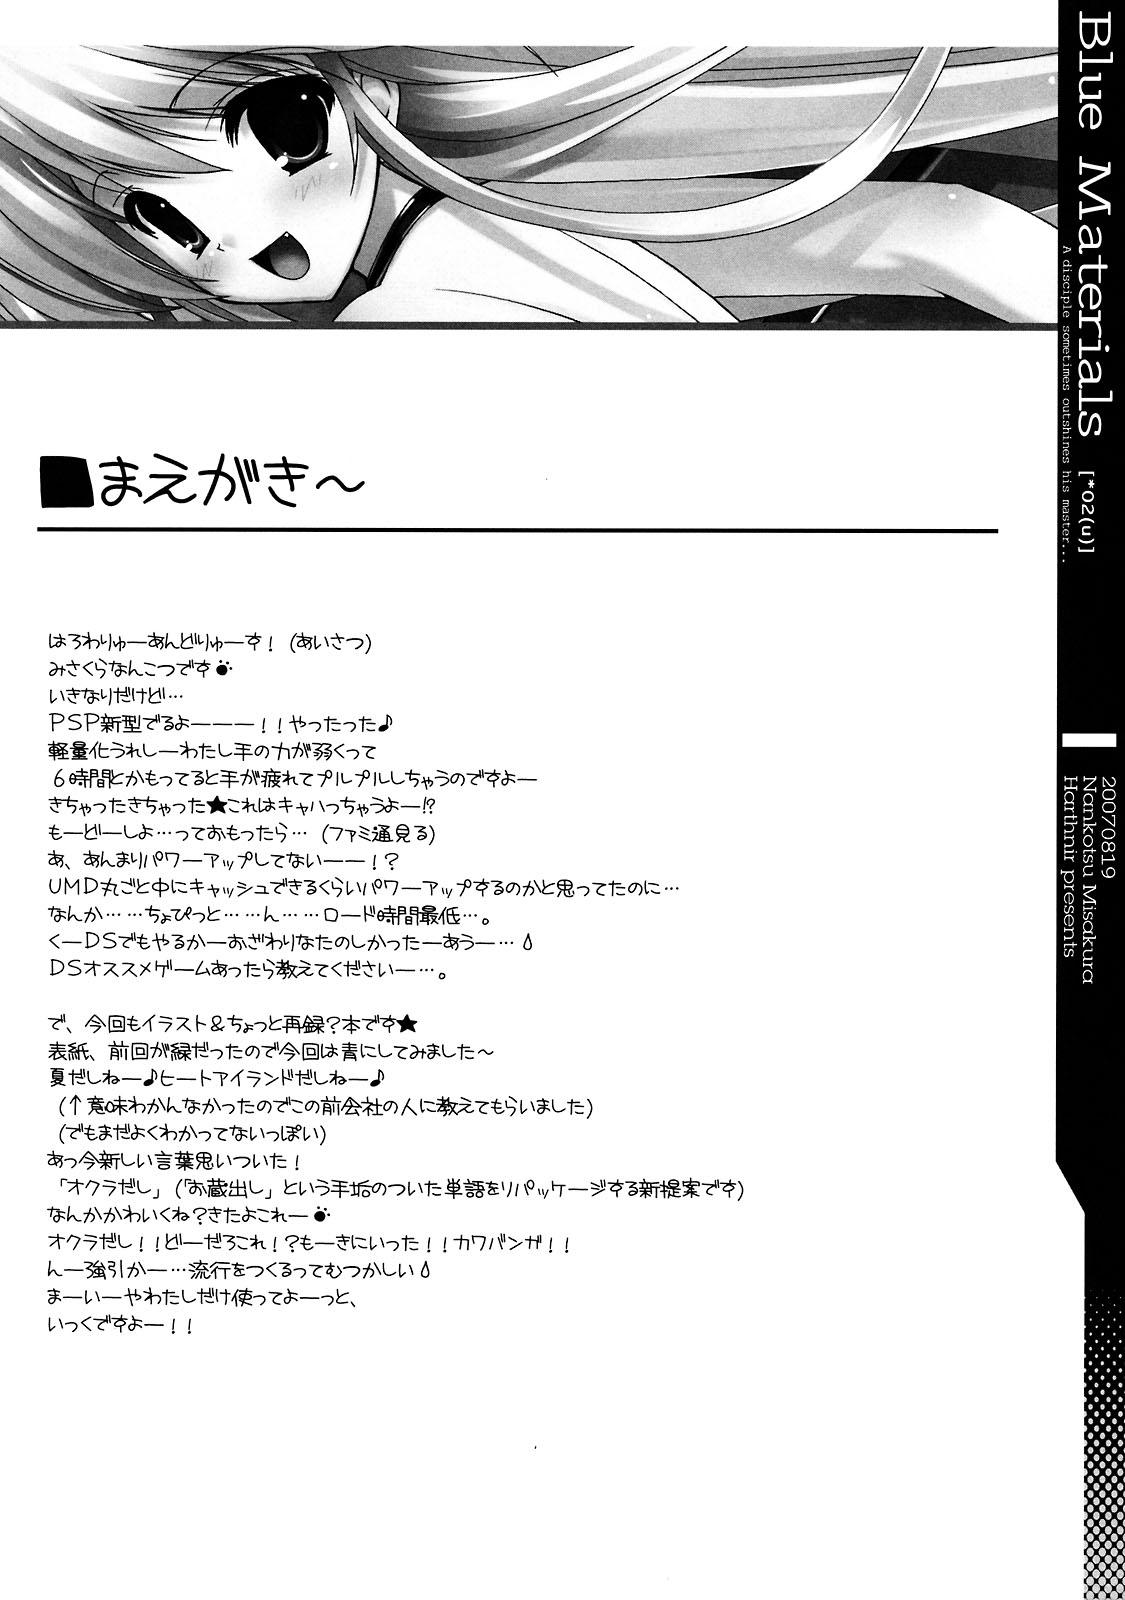 Culo Blue Materials. - Code geass Samurai spirits Rozen maiden Higurashi no naku koro ni Star ocean Moekan Everybodys tennis Huge Ass - Page 4